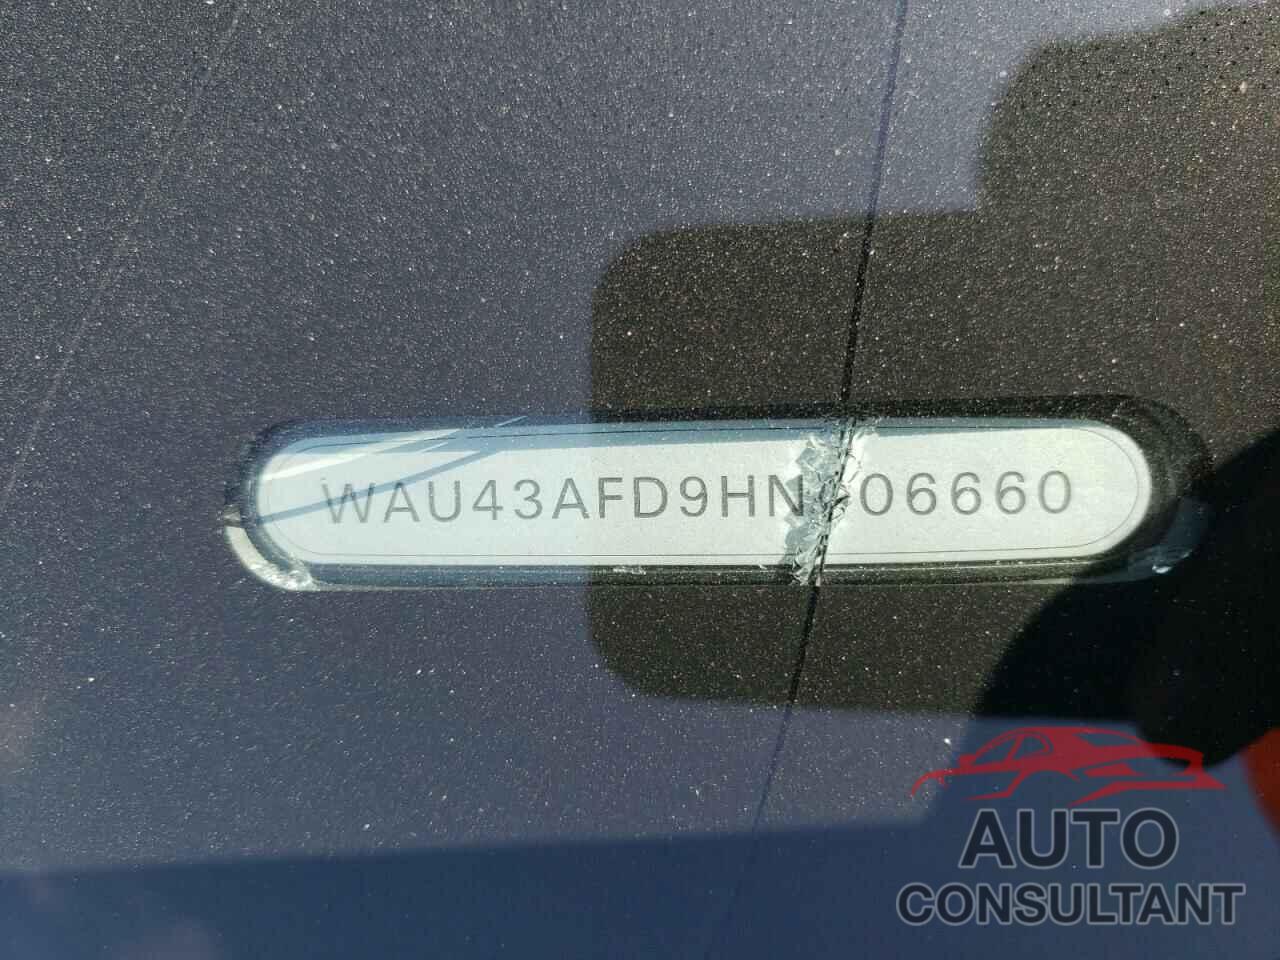 AUDI A8 2017 - WAU43AFD9HN006660